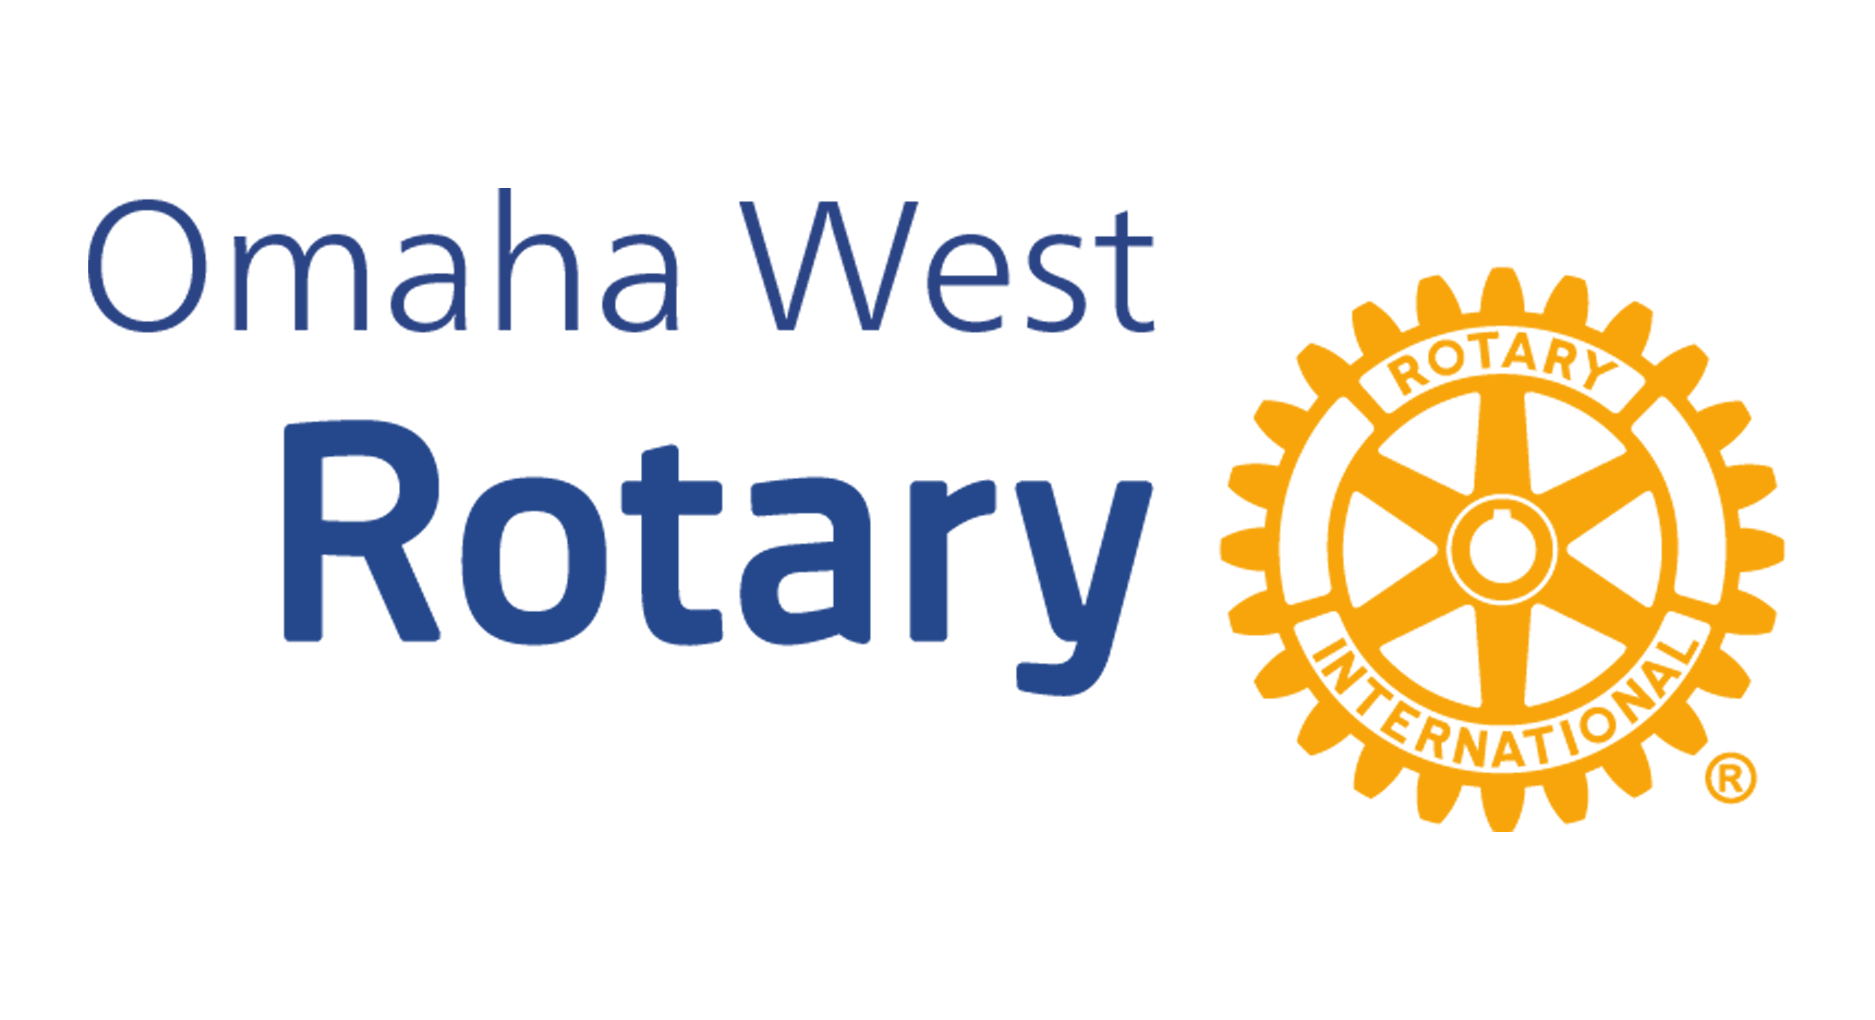 Omaha West Rotary Club Logo